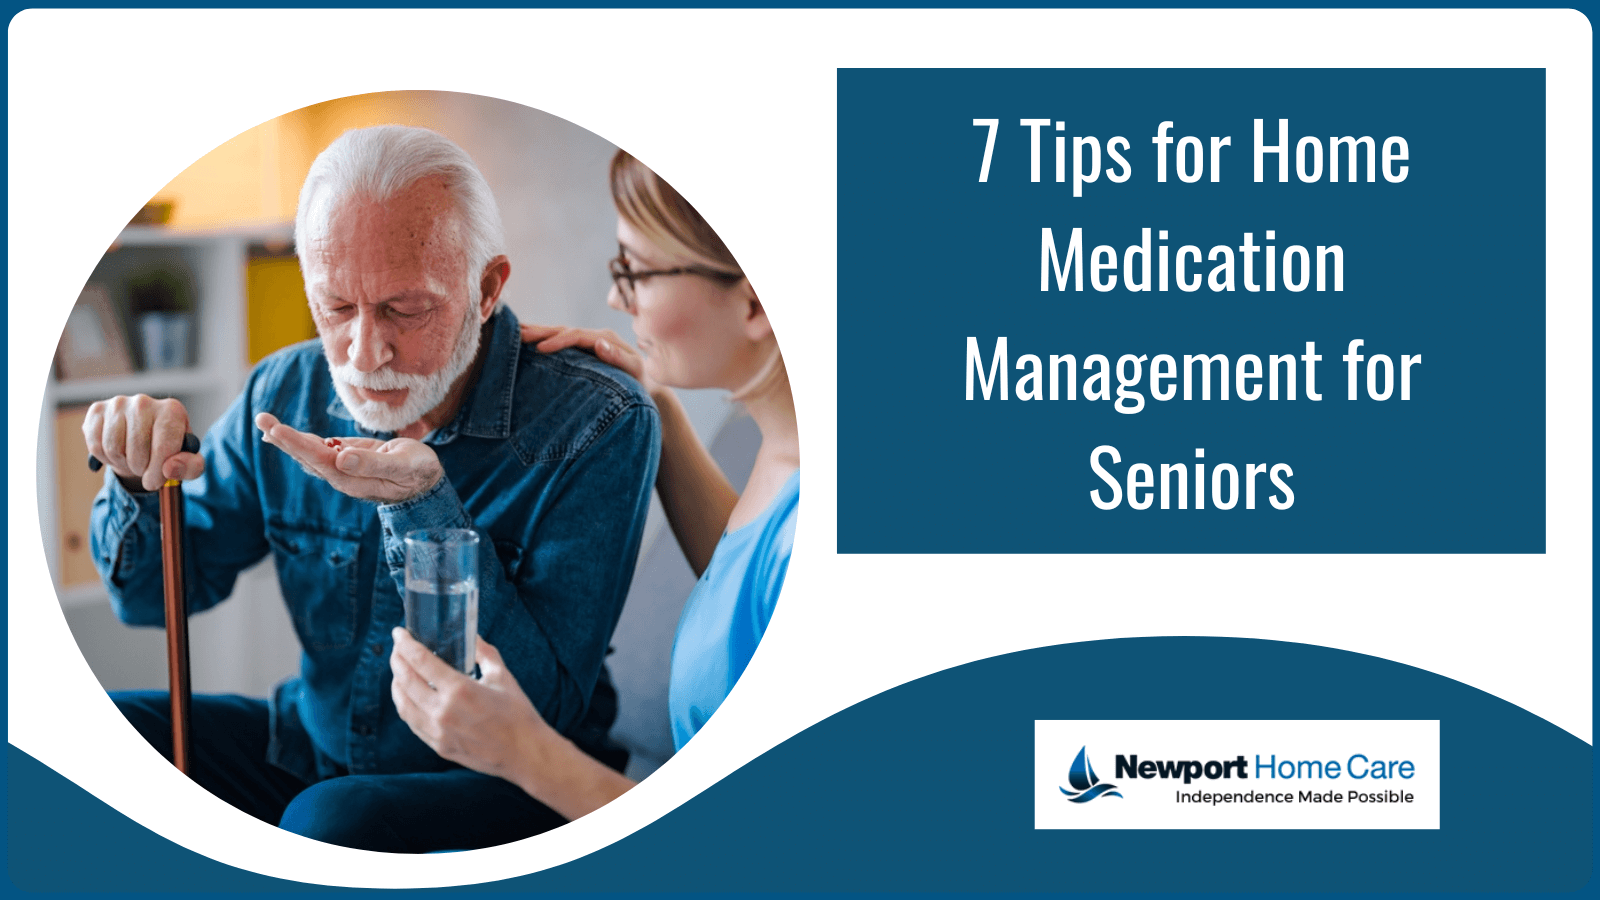 7 Tips for Home Medication Management for Seniors